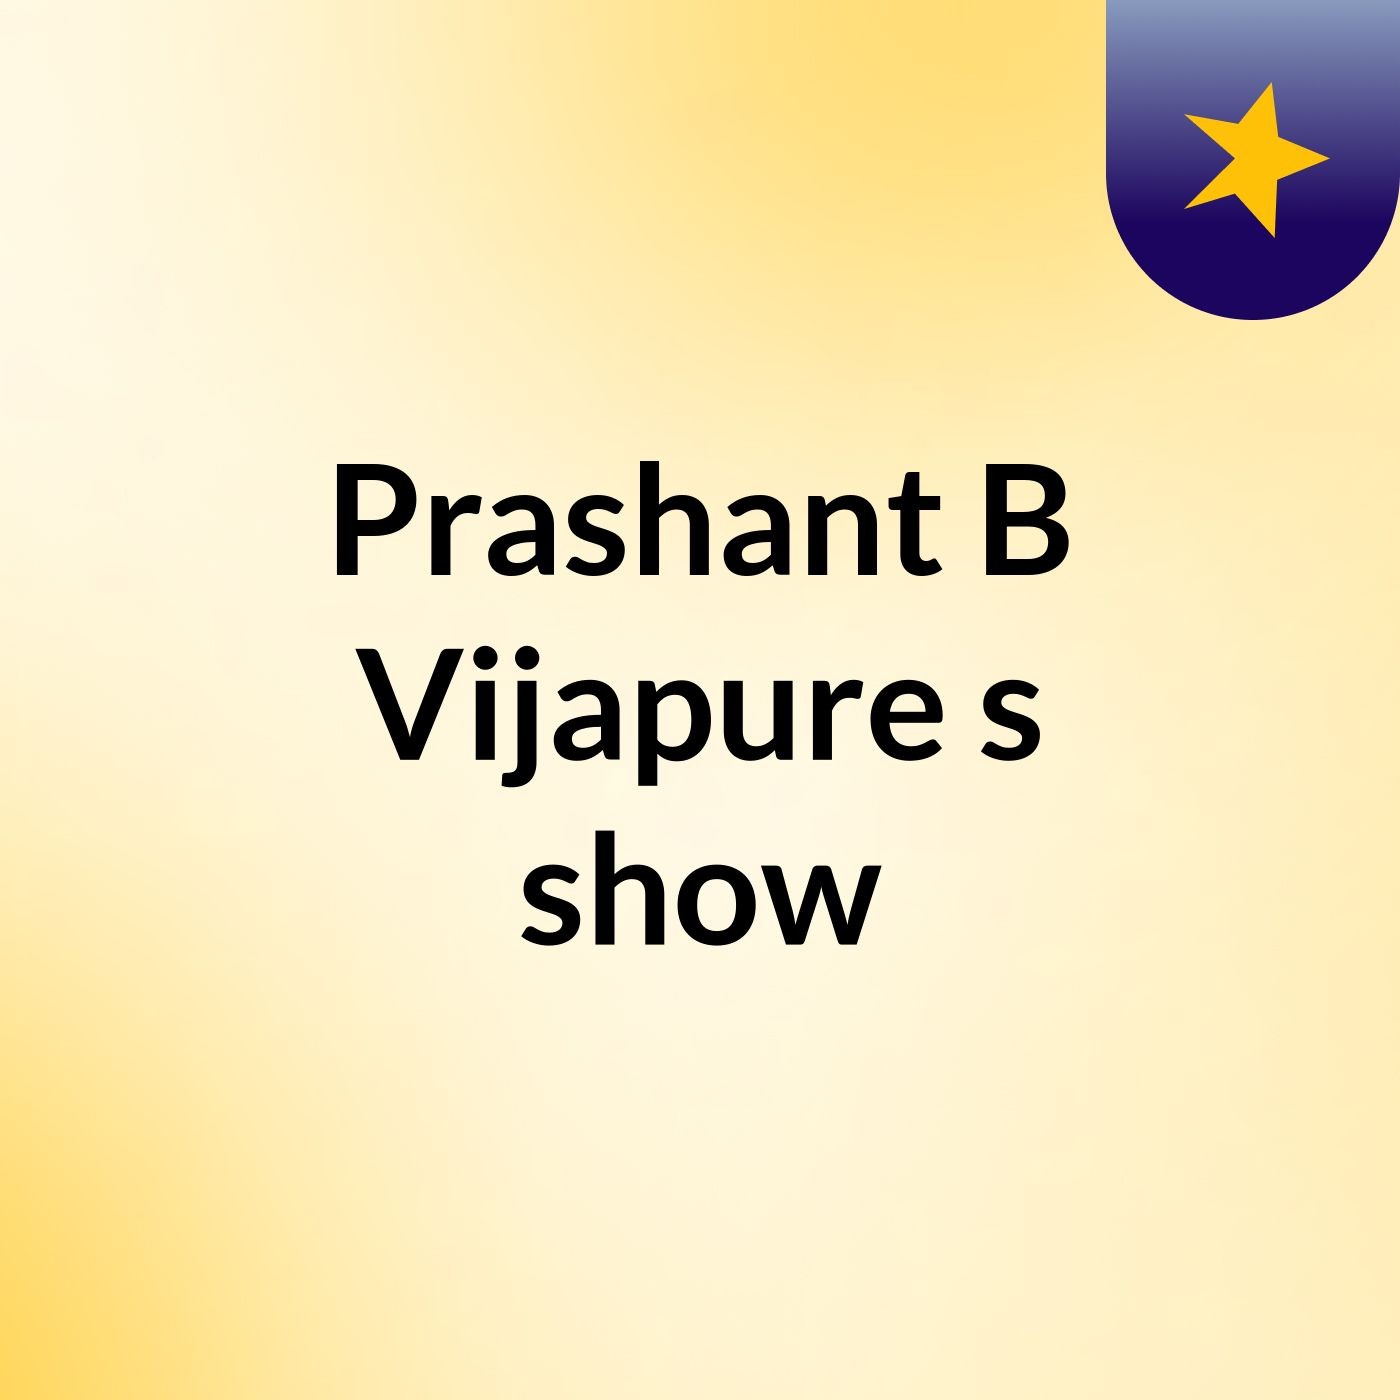 Prashant B Vijapure's show